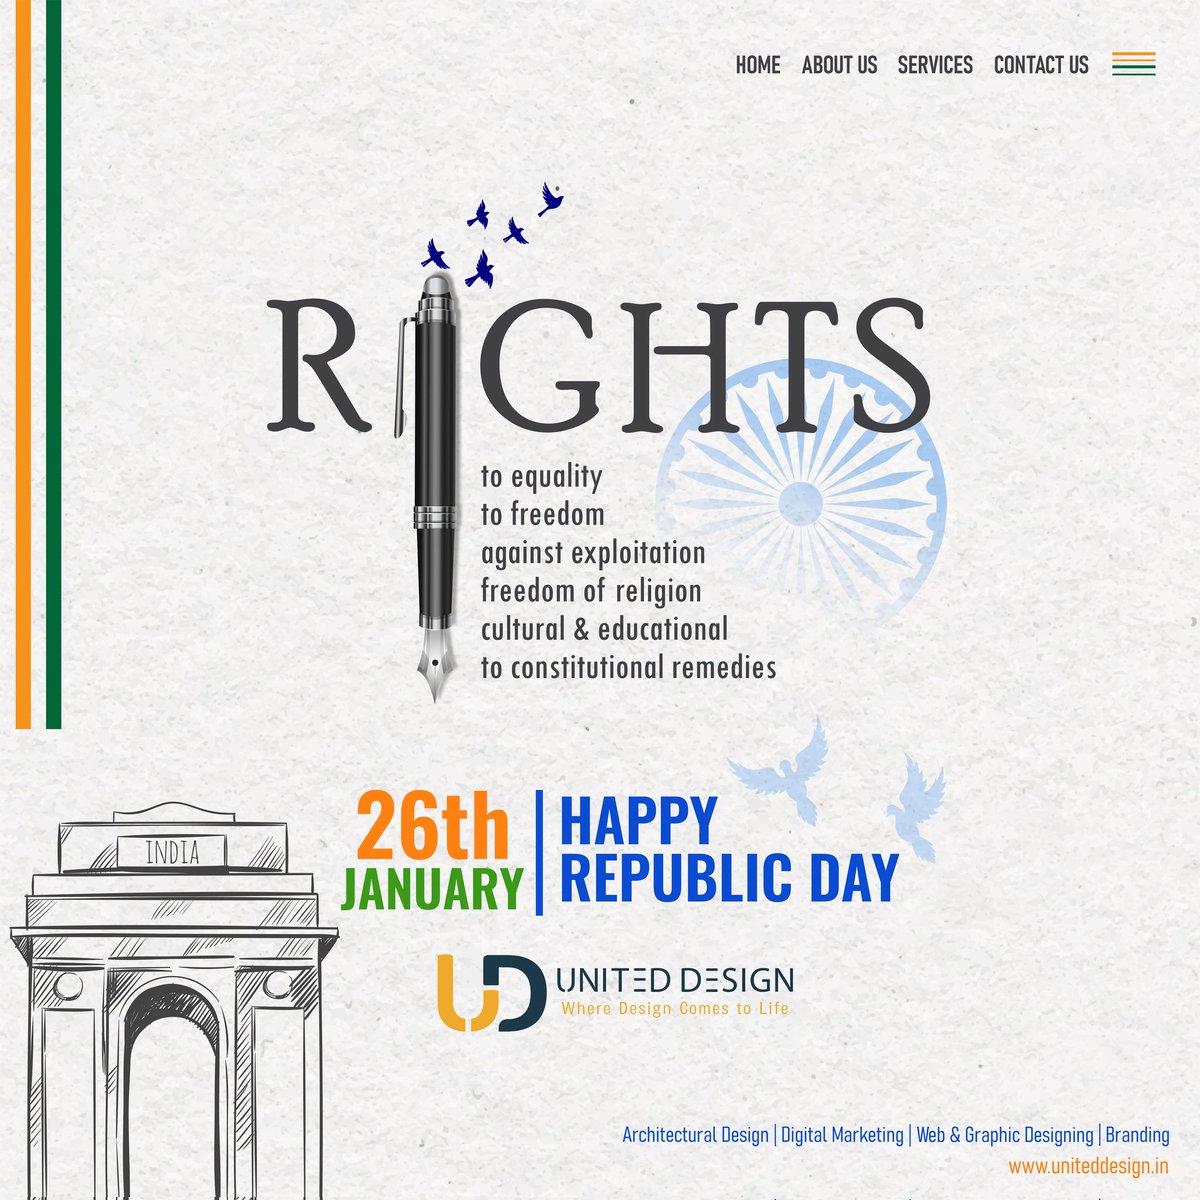 Celebrating the spirit of unity and freedom on this #RepublicDay 🇮🇳 #JaiHind #India
#RepublicDay #India #JaiHind #IndependenceDay #Patriotism #NationalPride #Freedom #Unity #Tricolor #Flag #Celebration #Tradition #Heritage #Honor #Salute #73rdRepublicDay